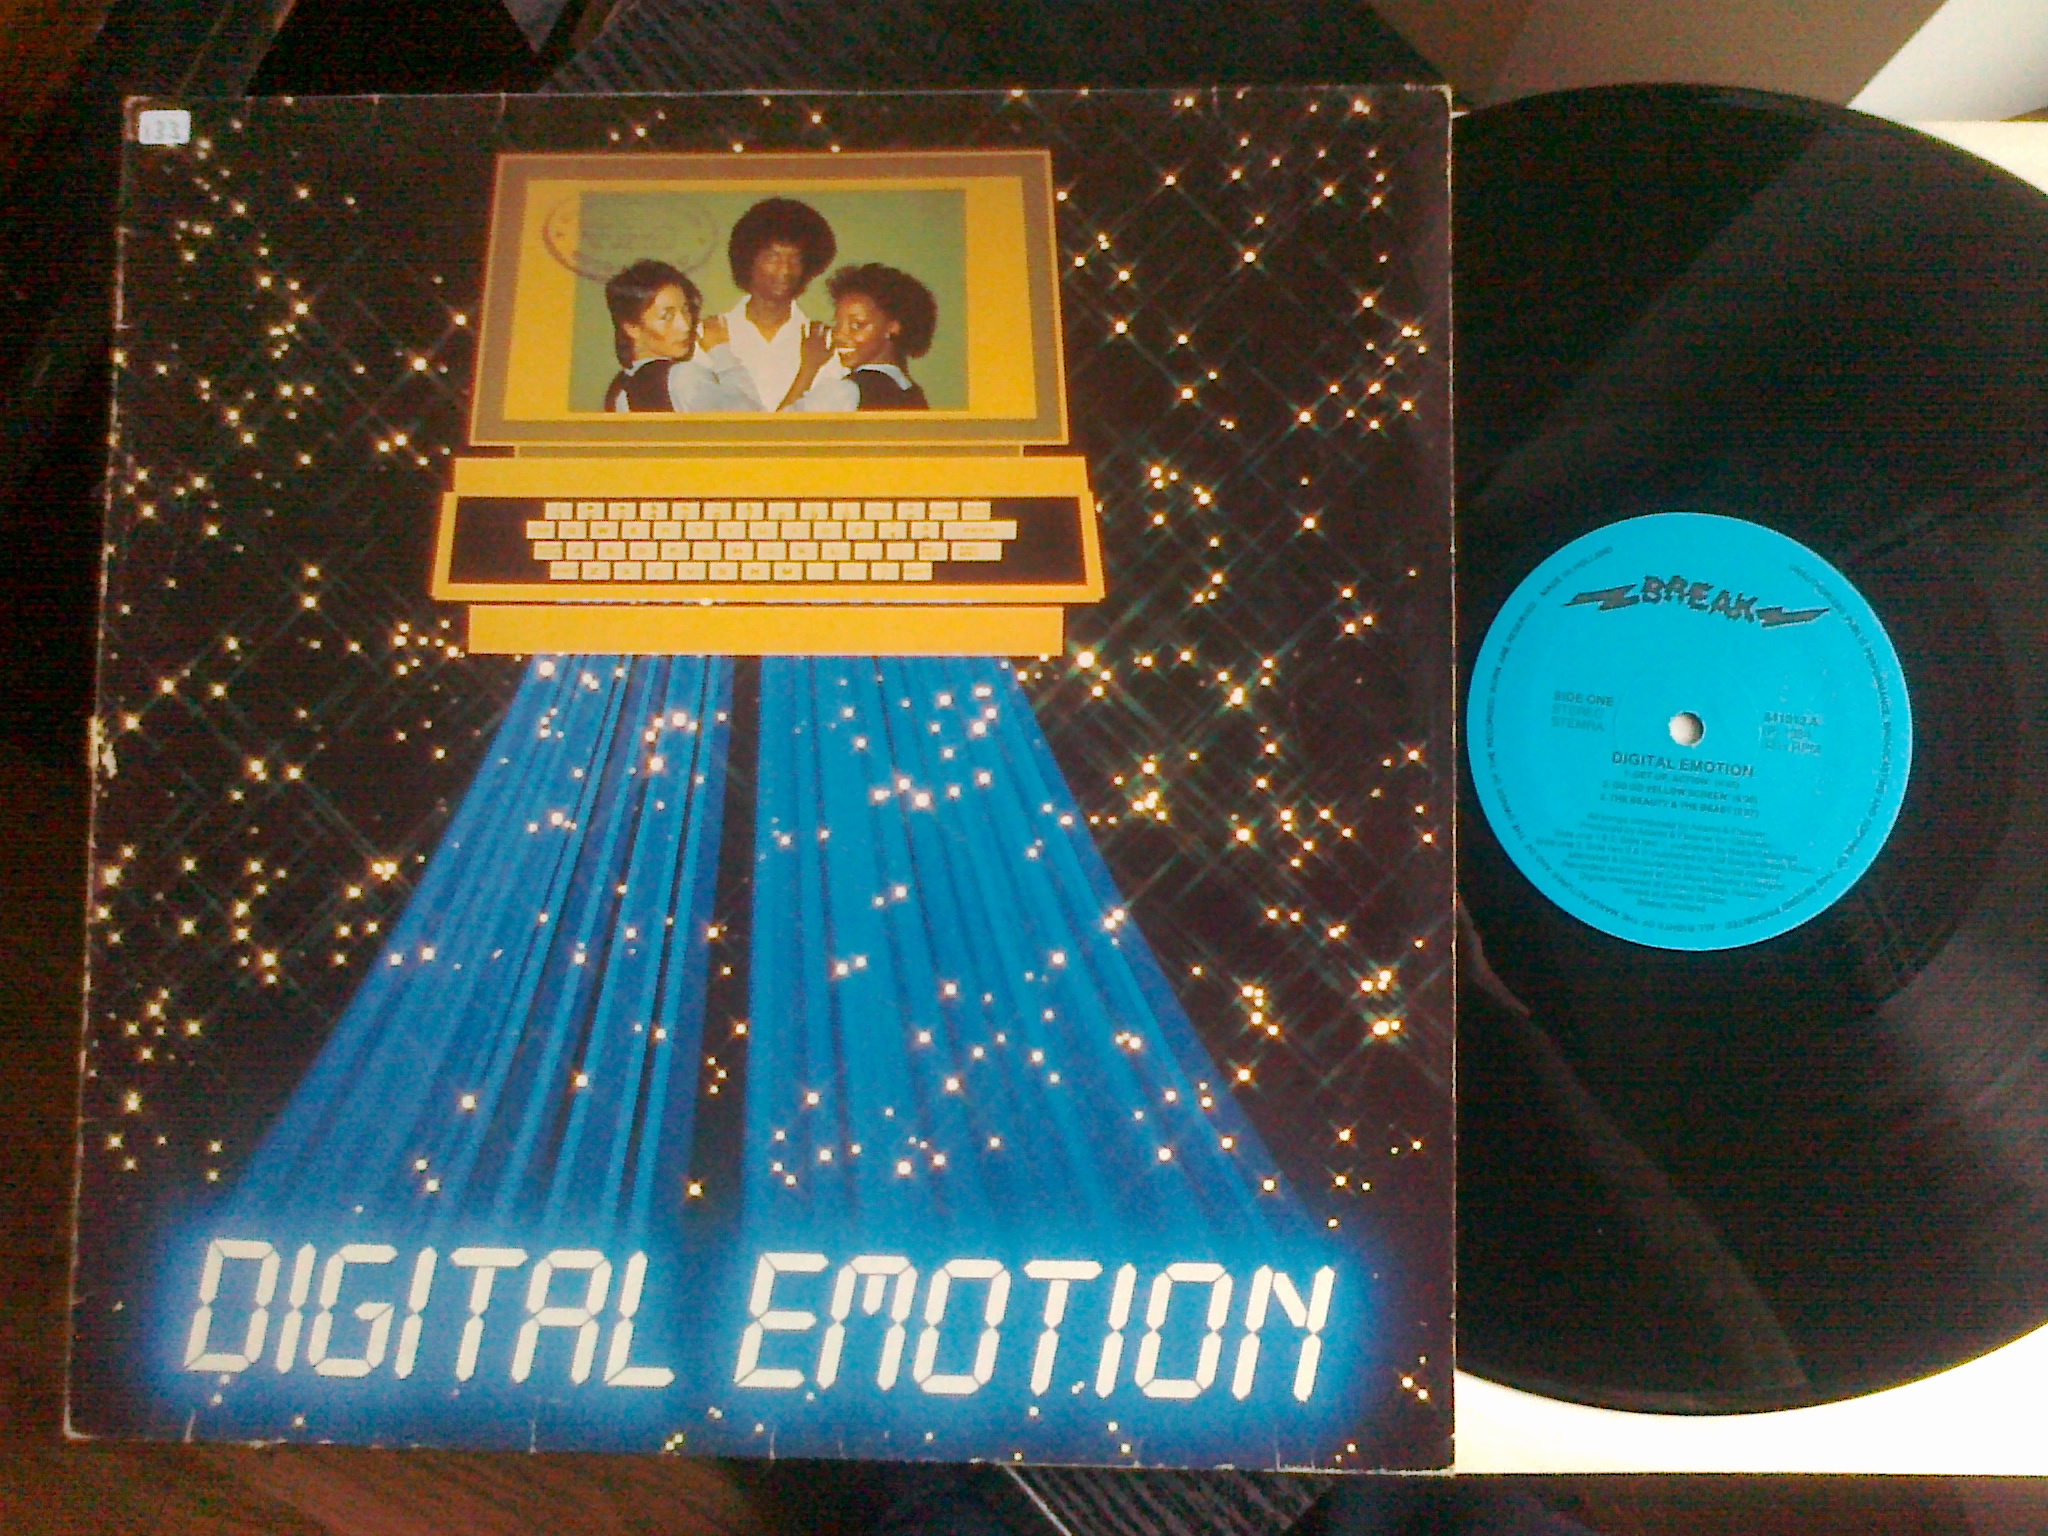 Digital Emotion LP